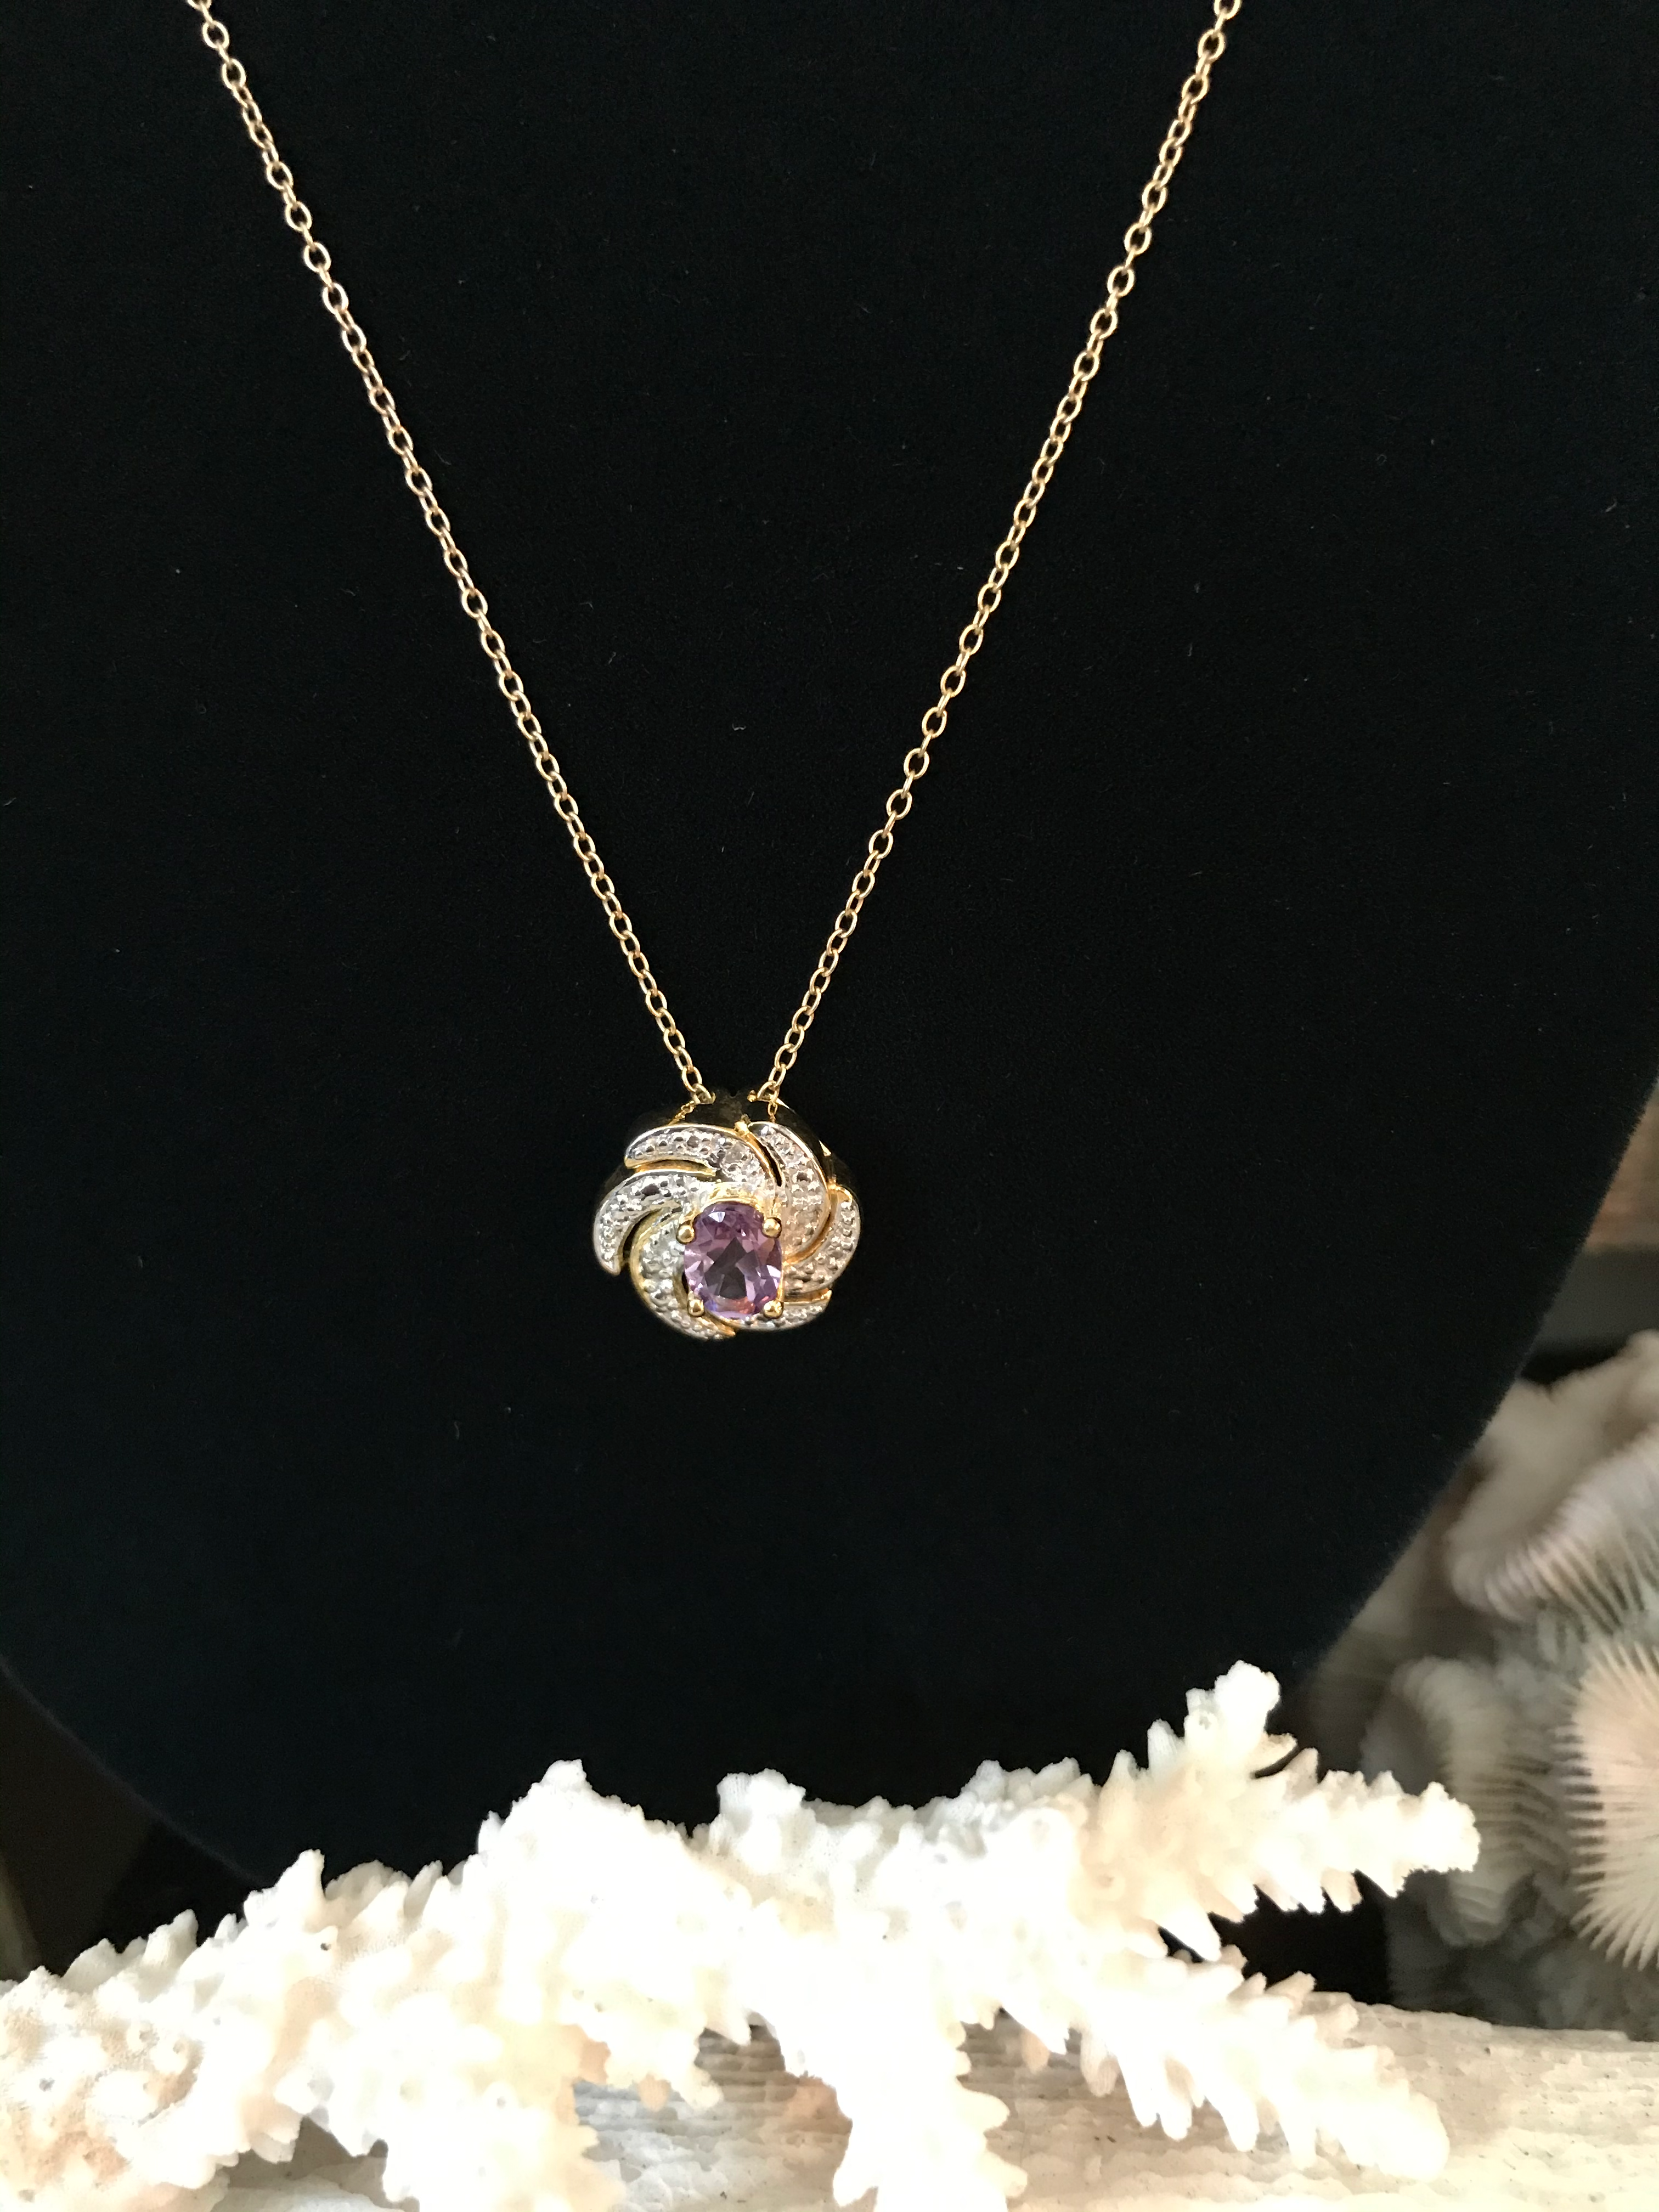 Diamond & Amethyst Pendant with 18" Chain - Shop Thrifty Treasures